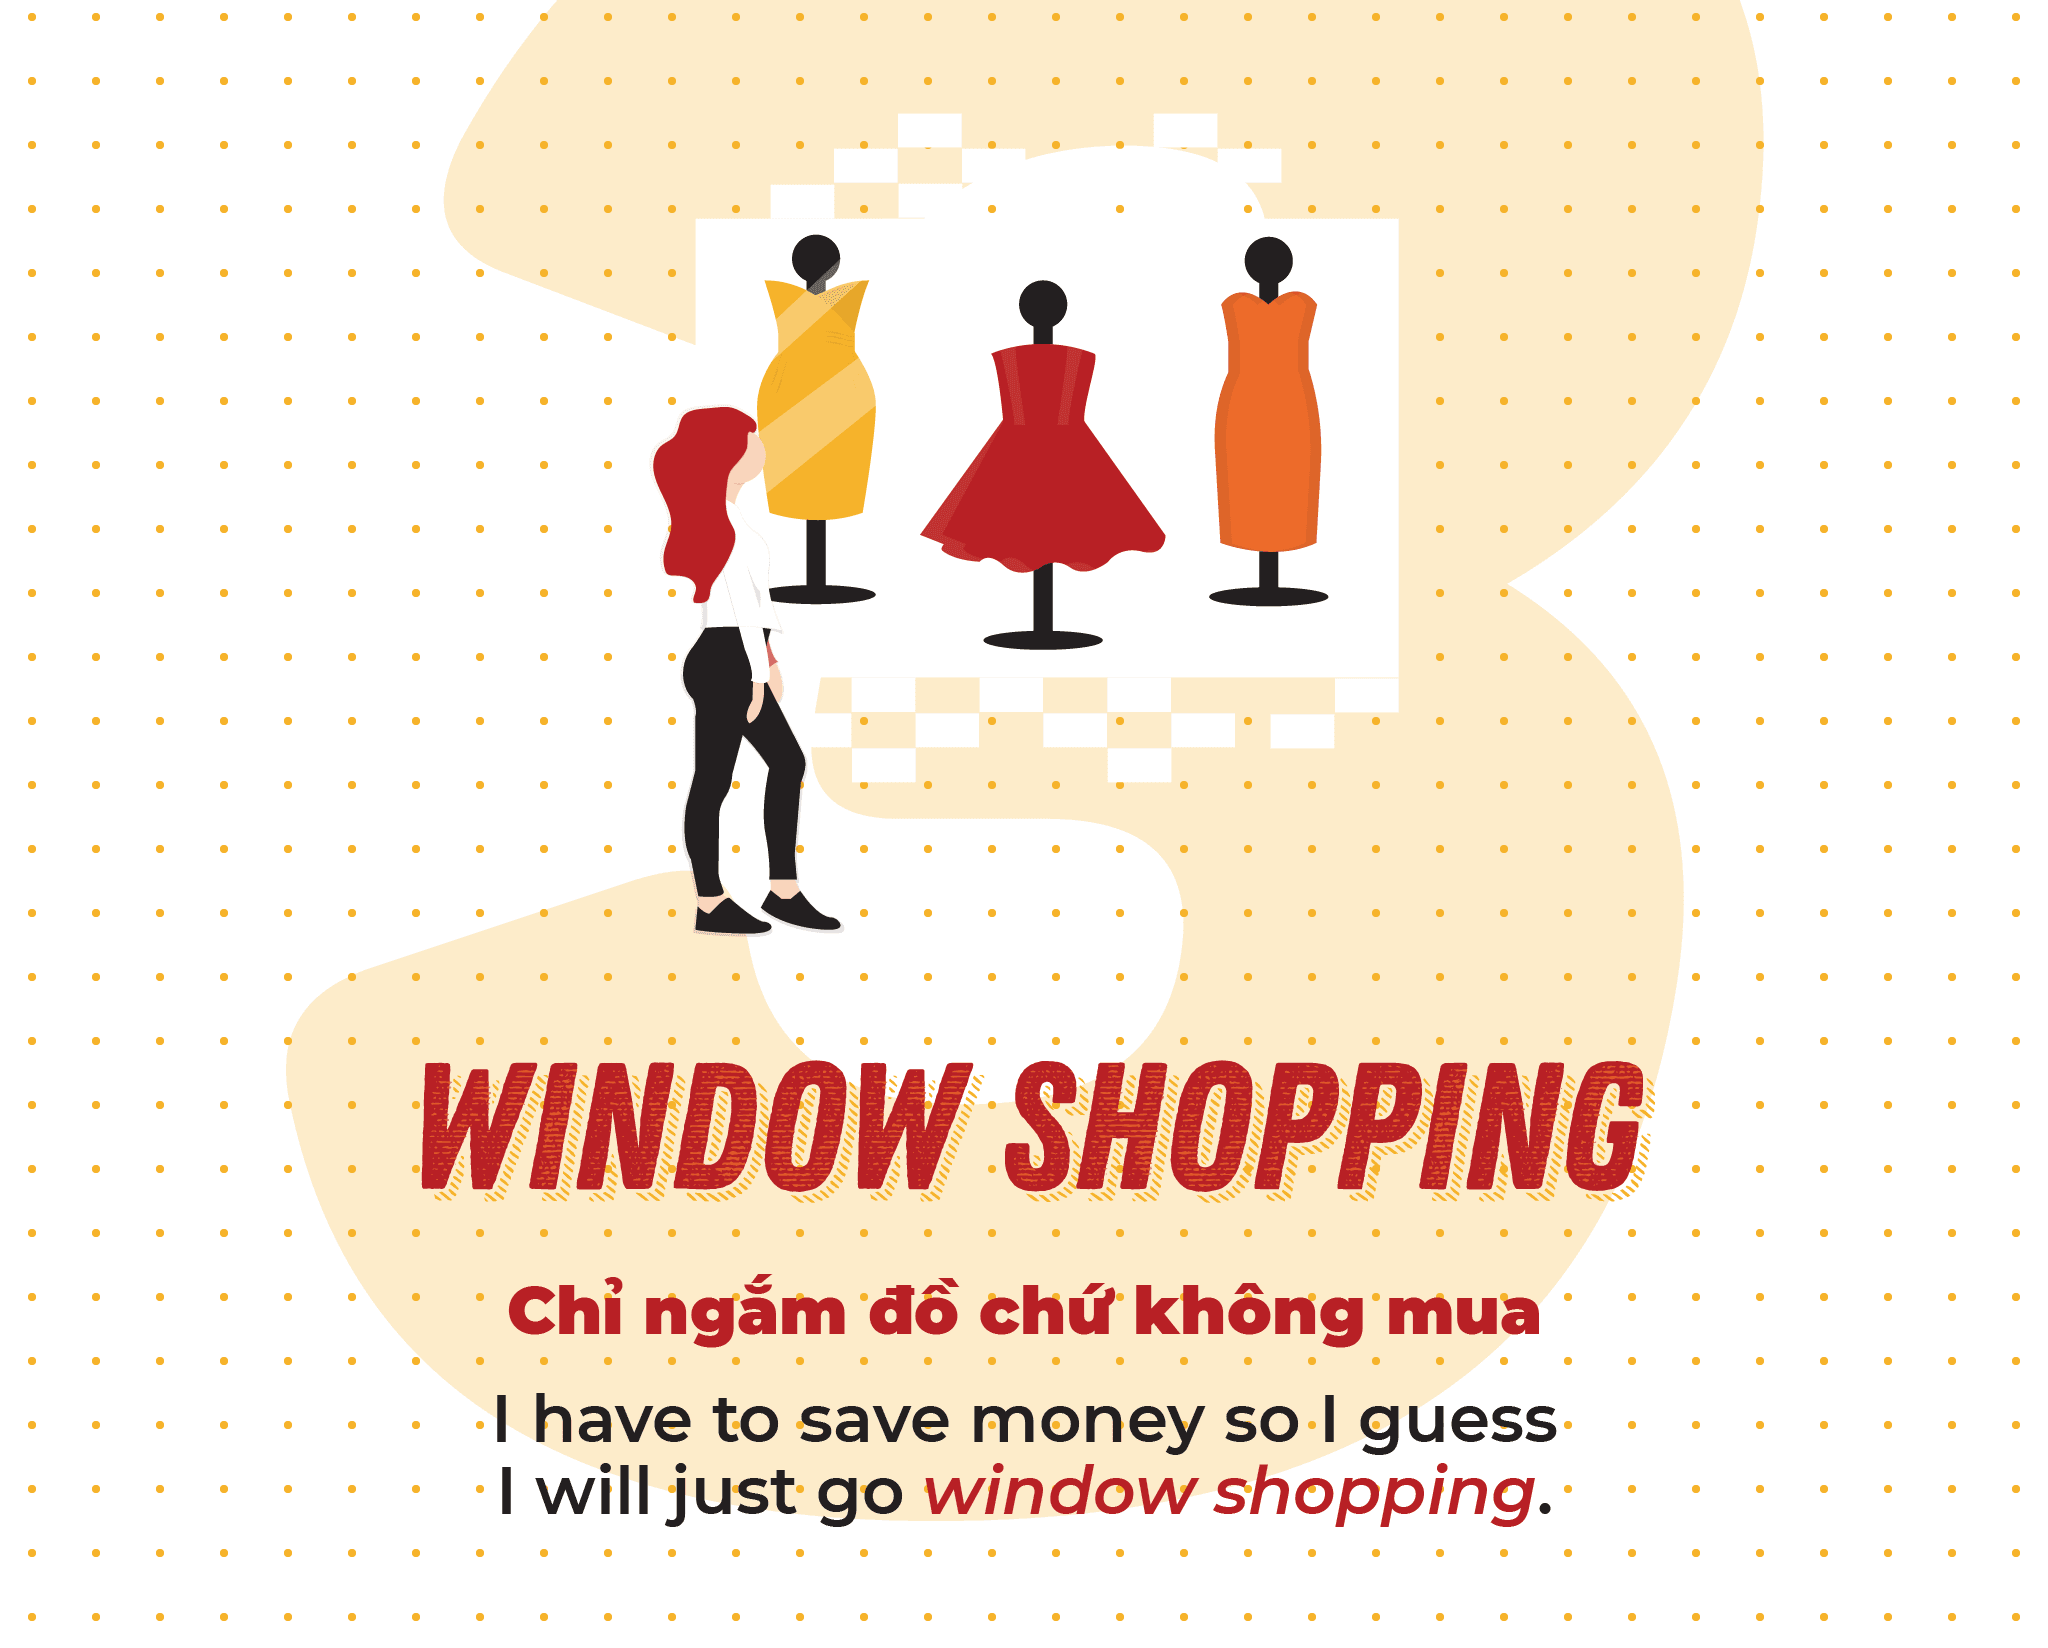 Window-shopping idiom theo chủ đề Shopping